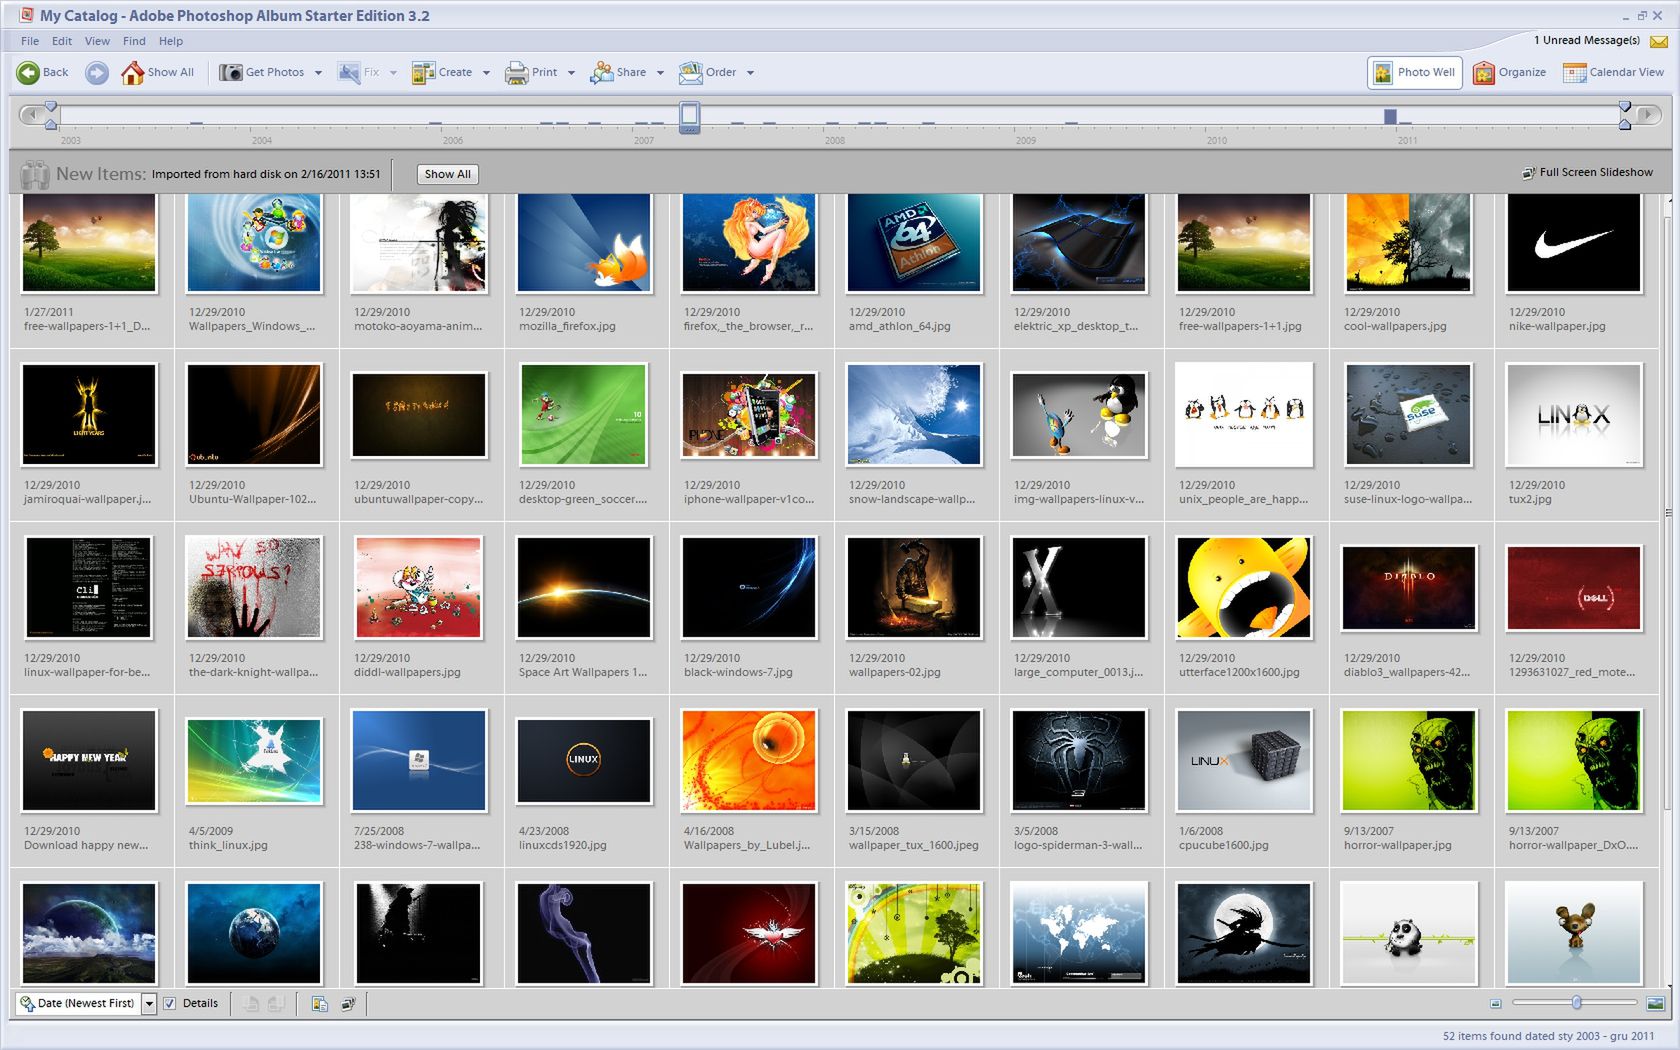 adobe photoshop starter edition 3.2 free download windows 7